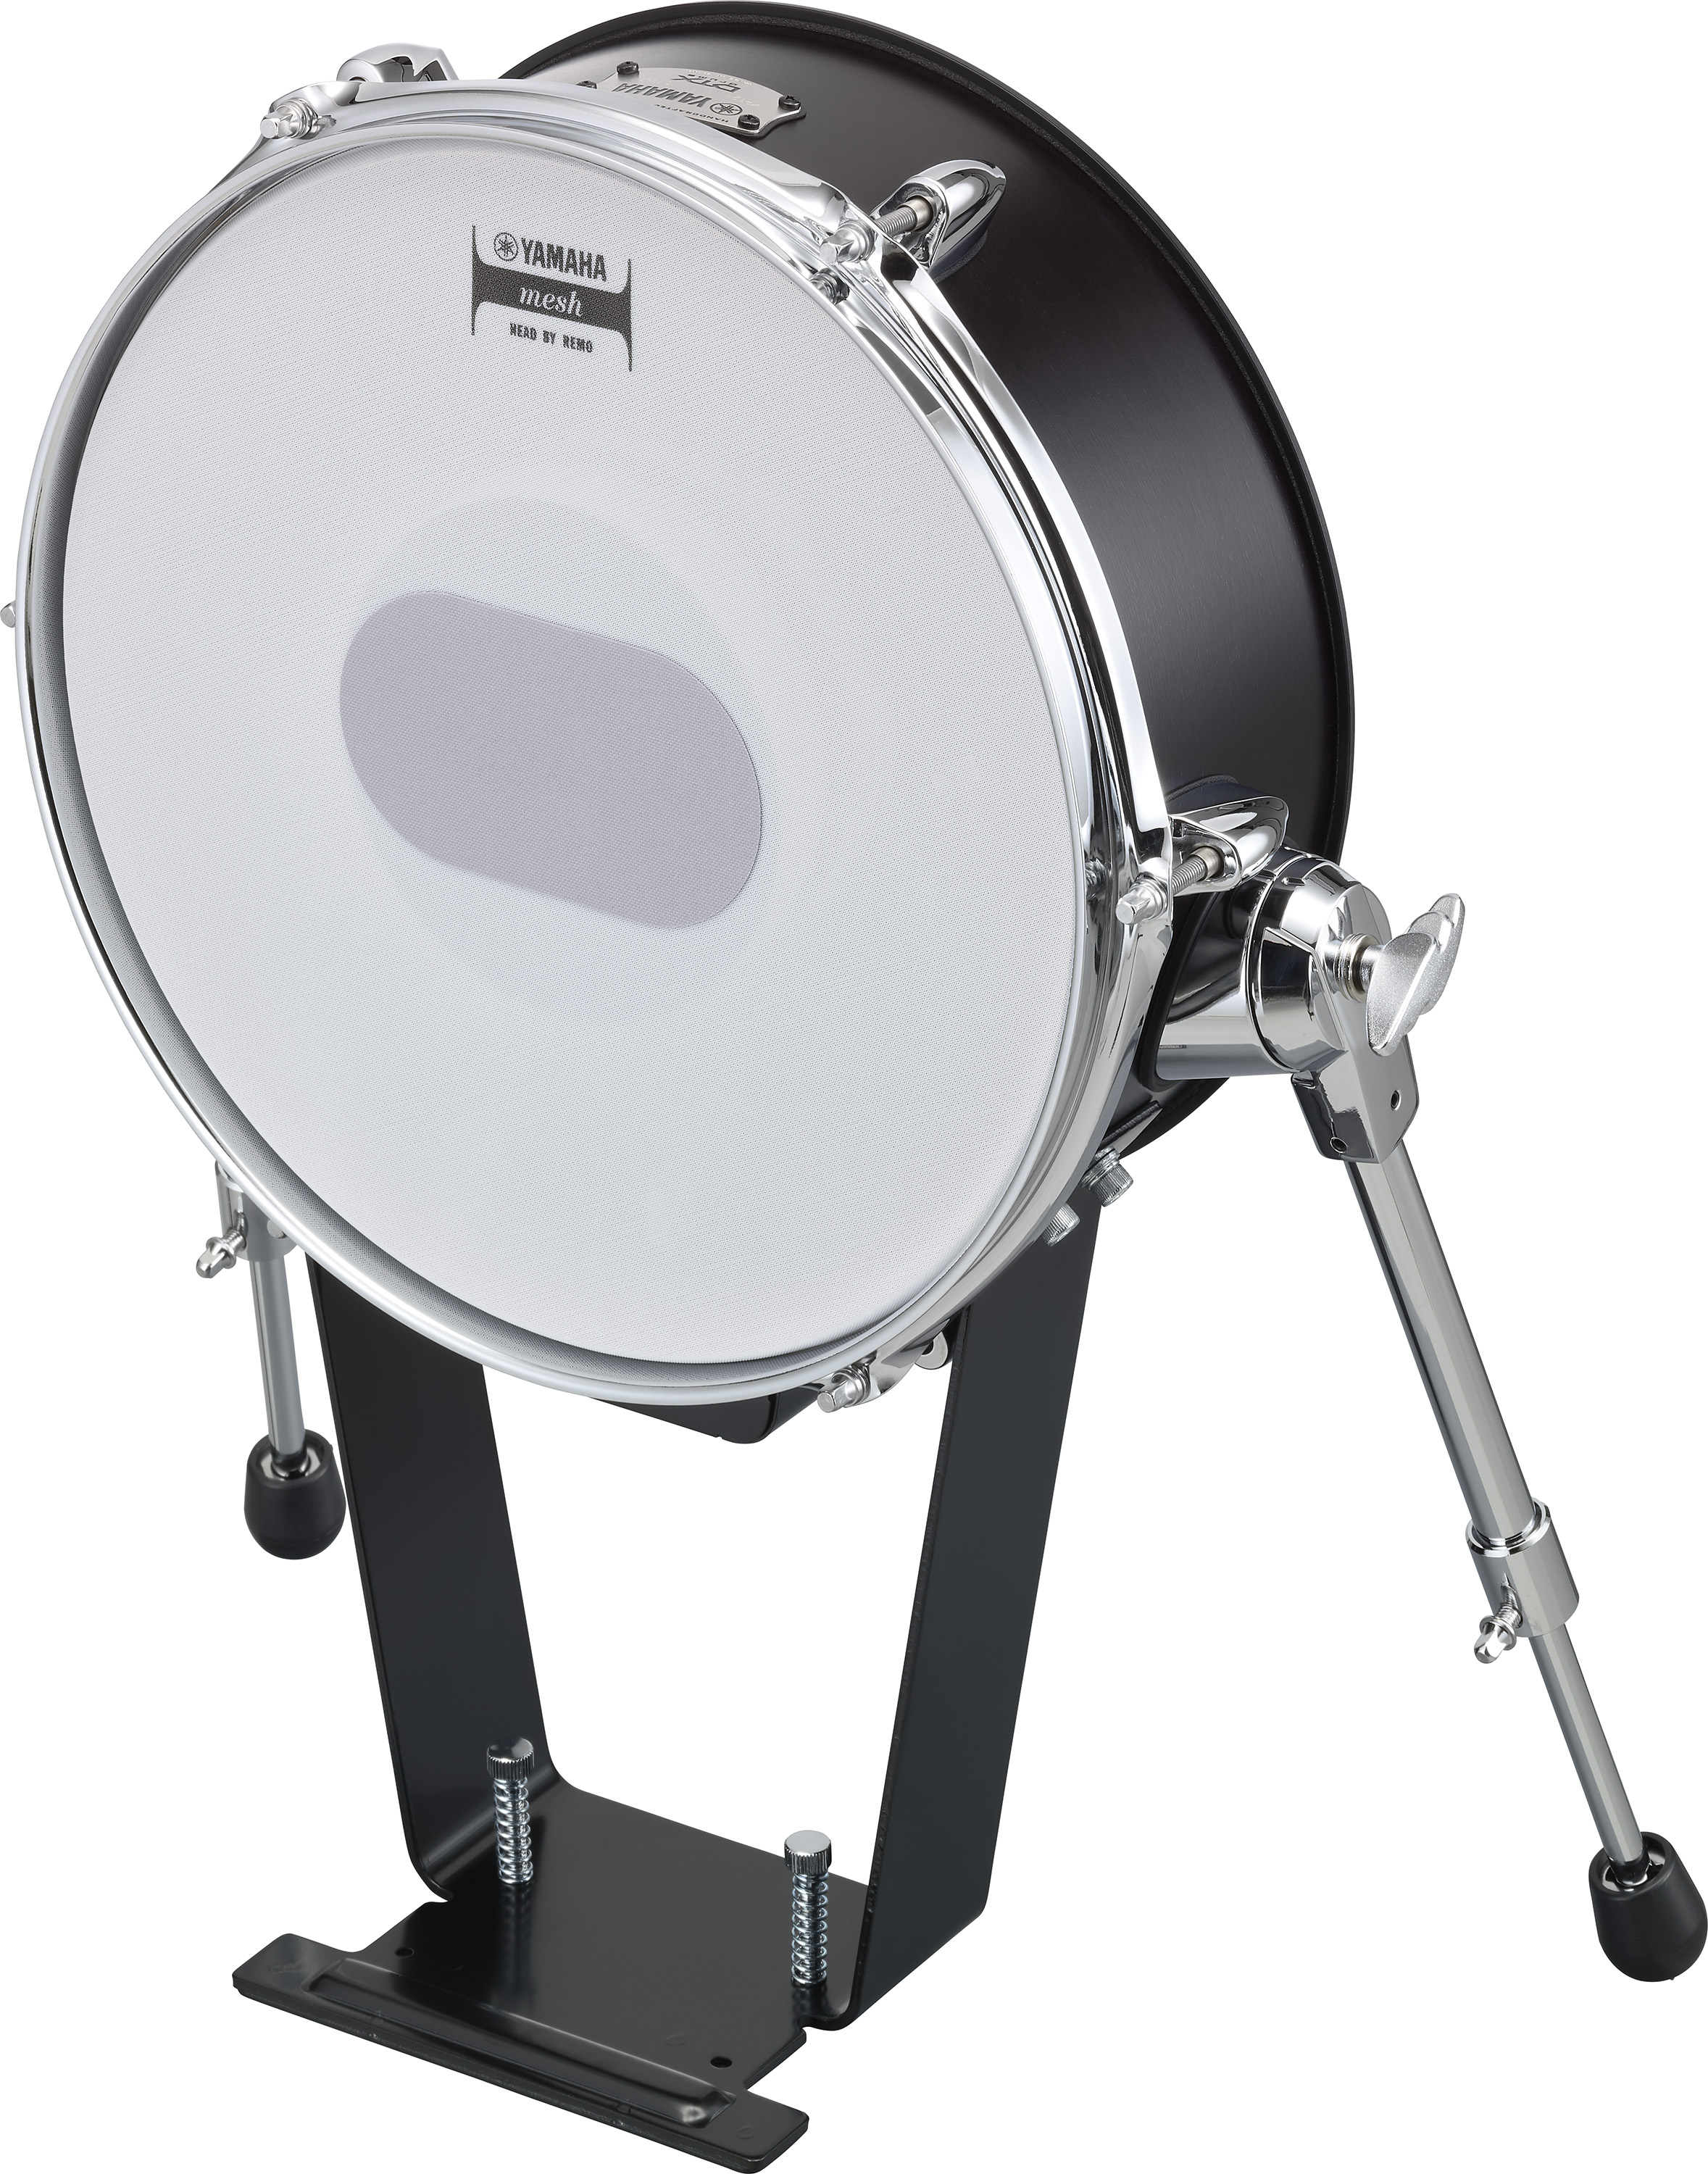 Yamaha Dtx10-kx Electronic Drum Kit Black Forrest - Komplett E-Drum Set - Variation 3